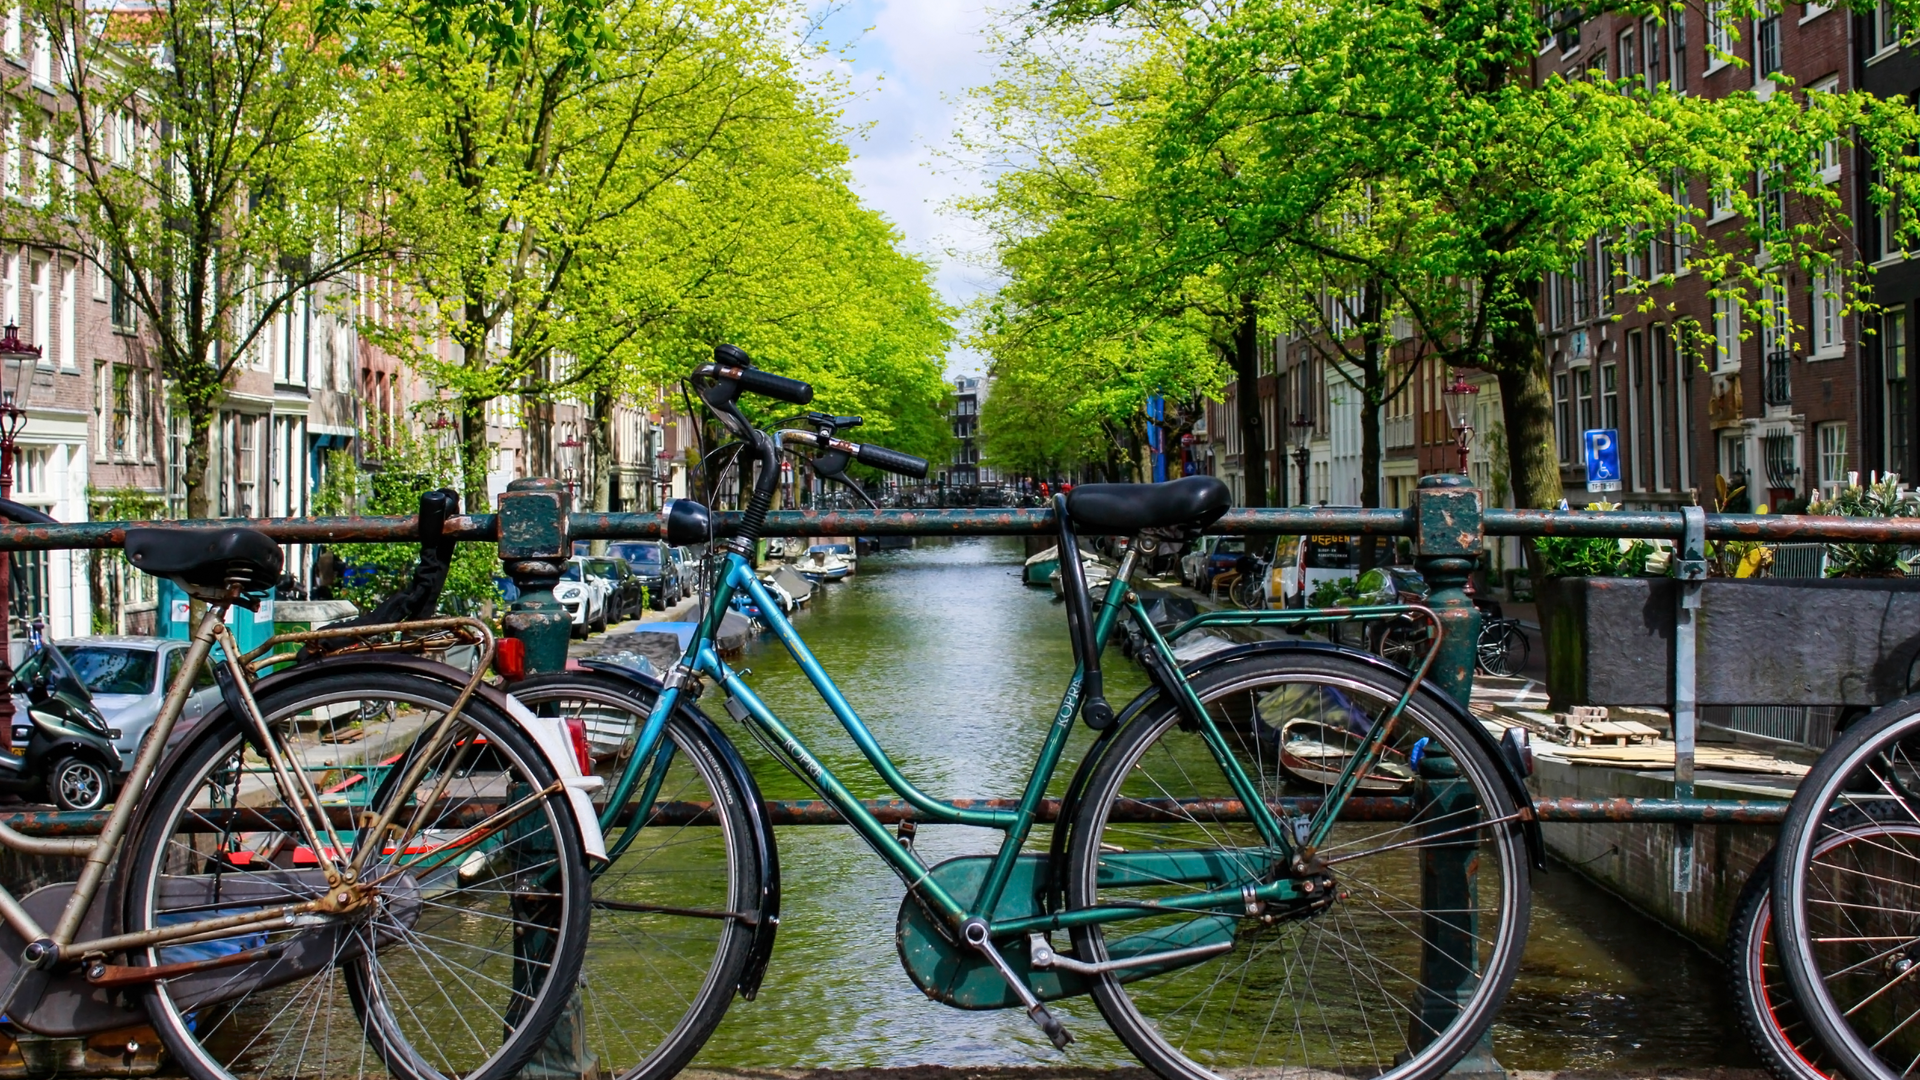 travel sustainably by biking